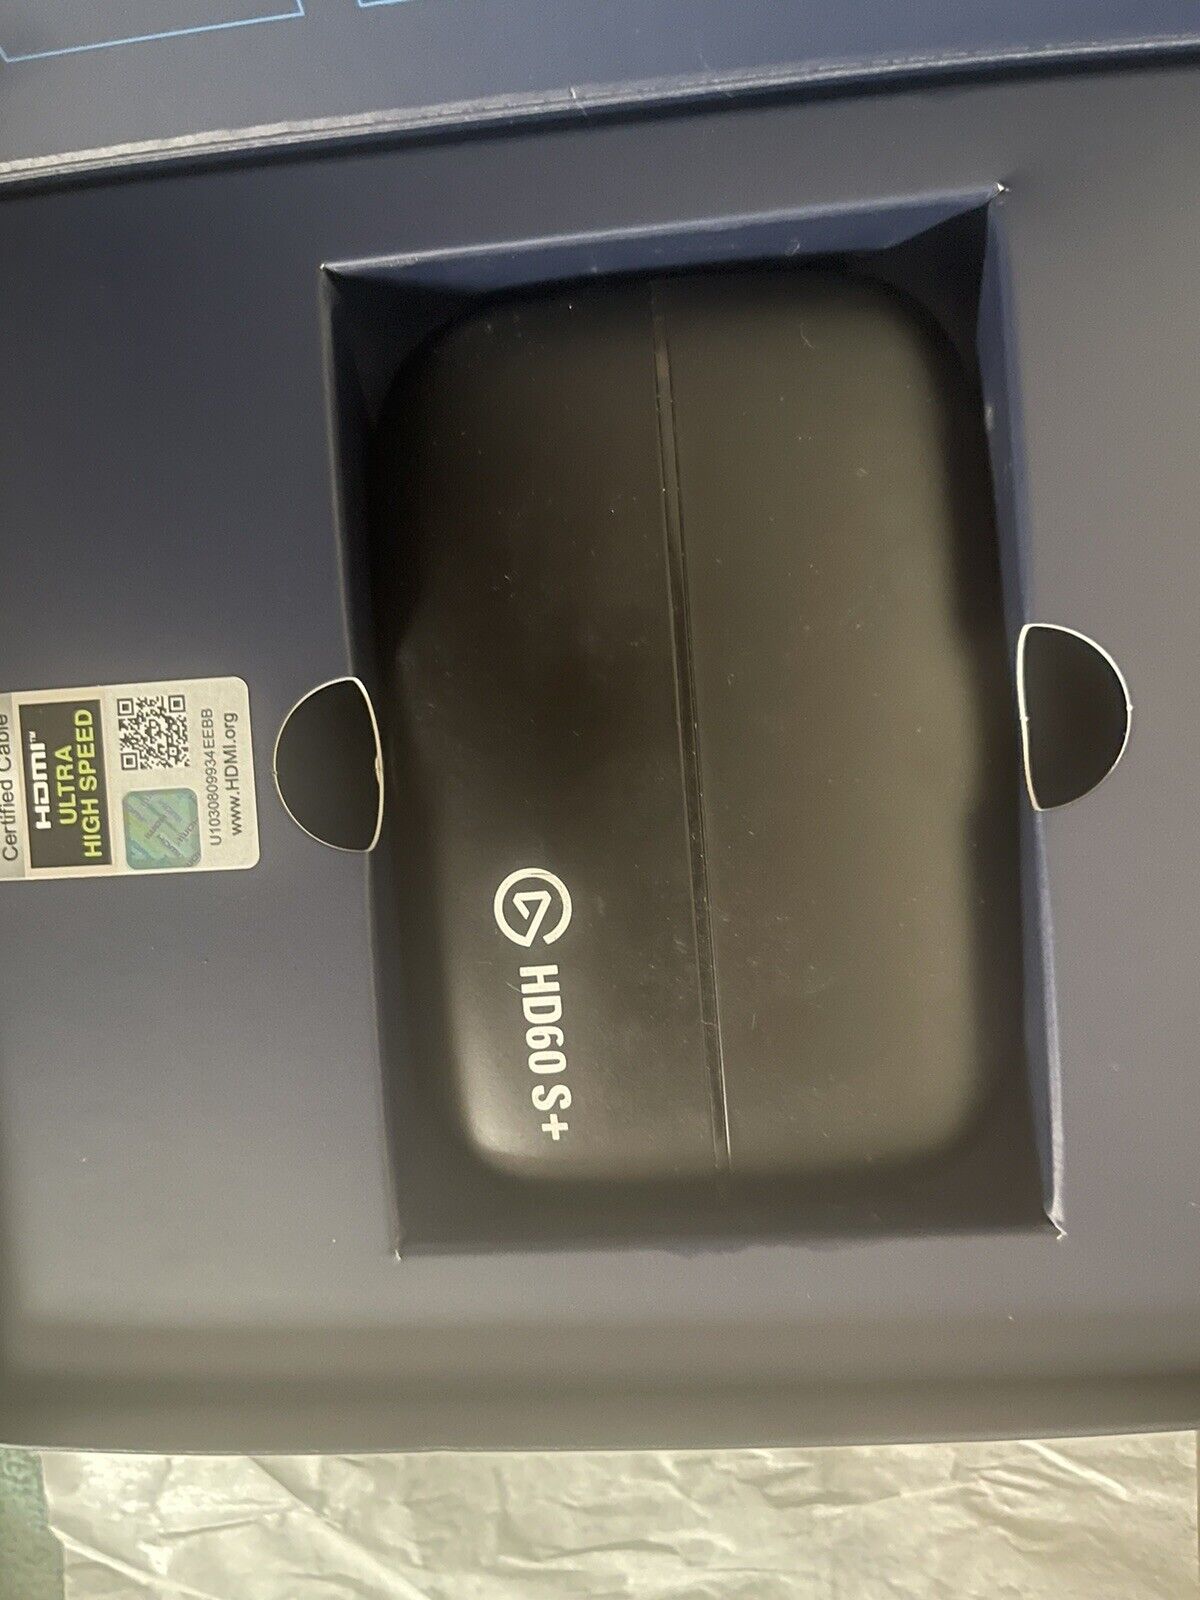 Elgato HD60 S+ Video Capture Card - 10GAR9901